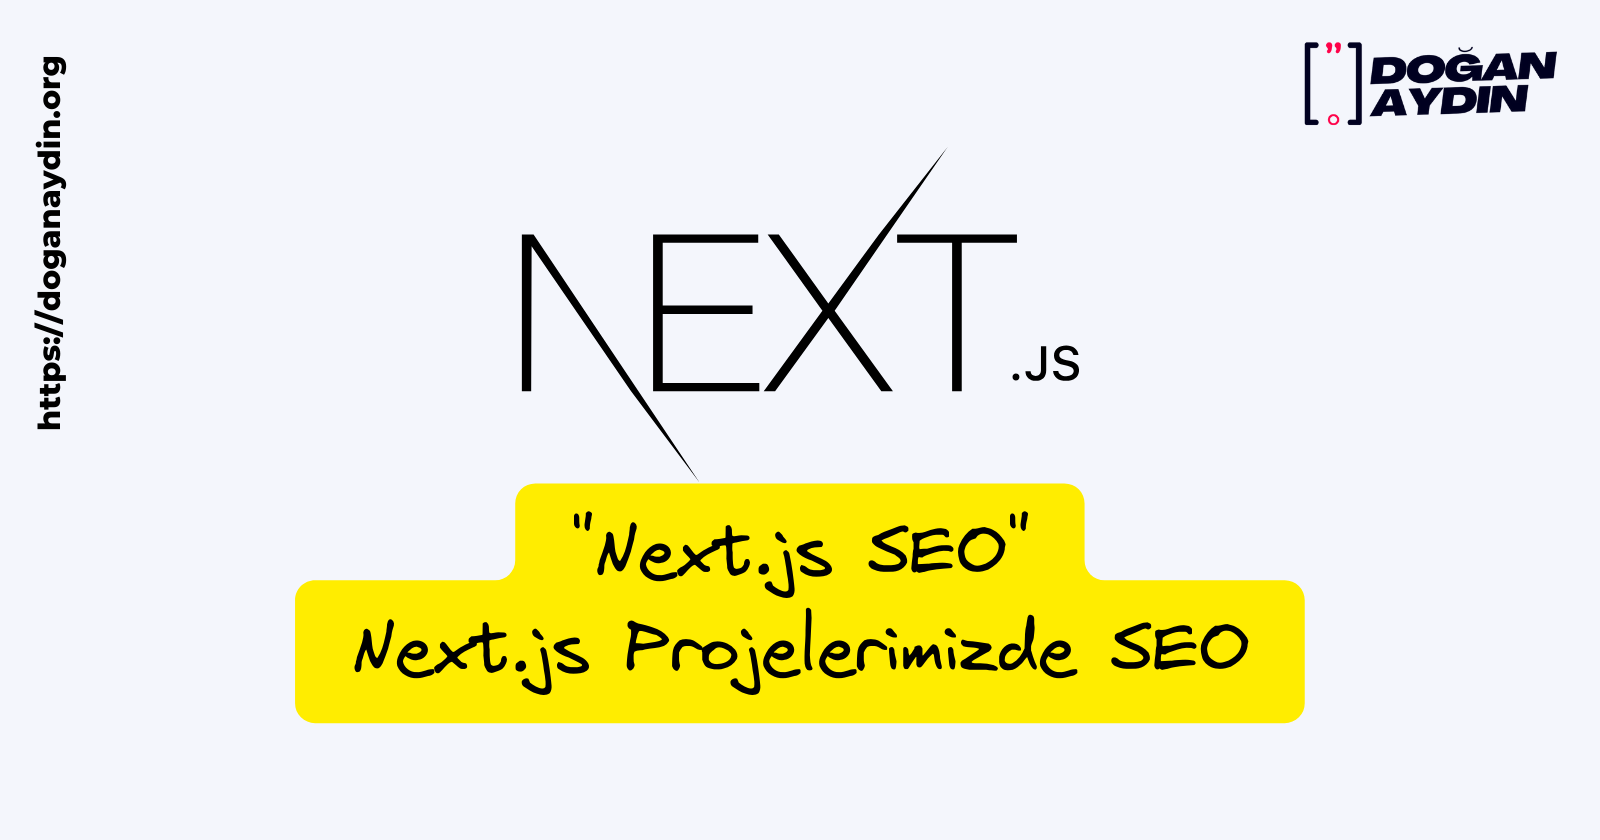 Next.js SEO - Next.js Projelerimizde SEO